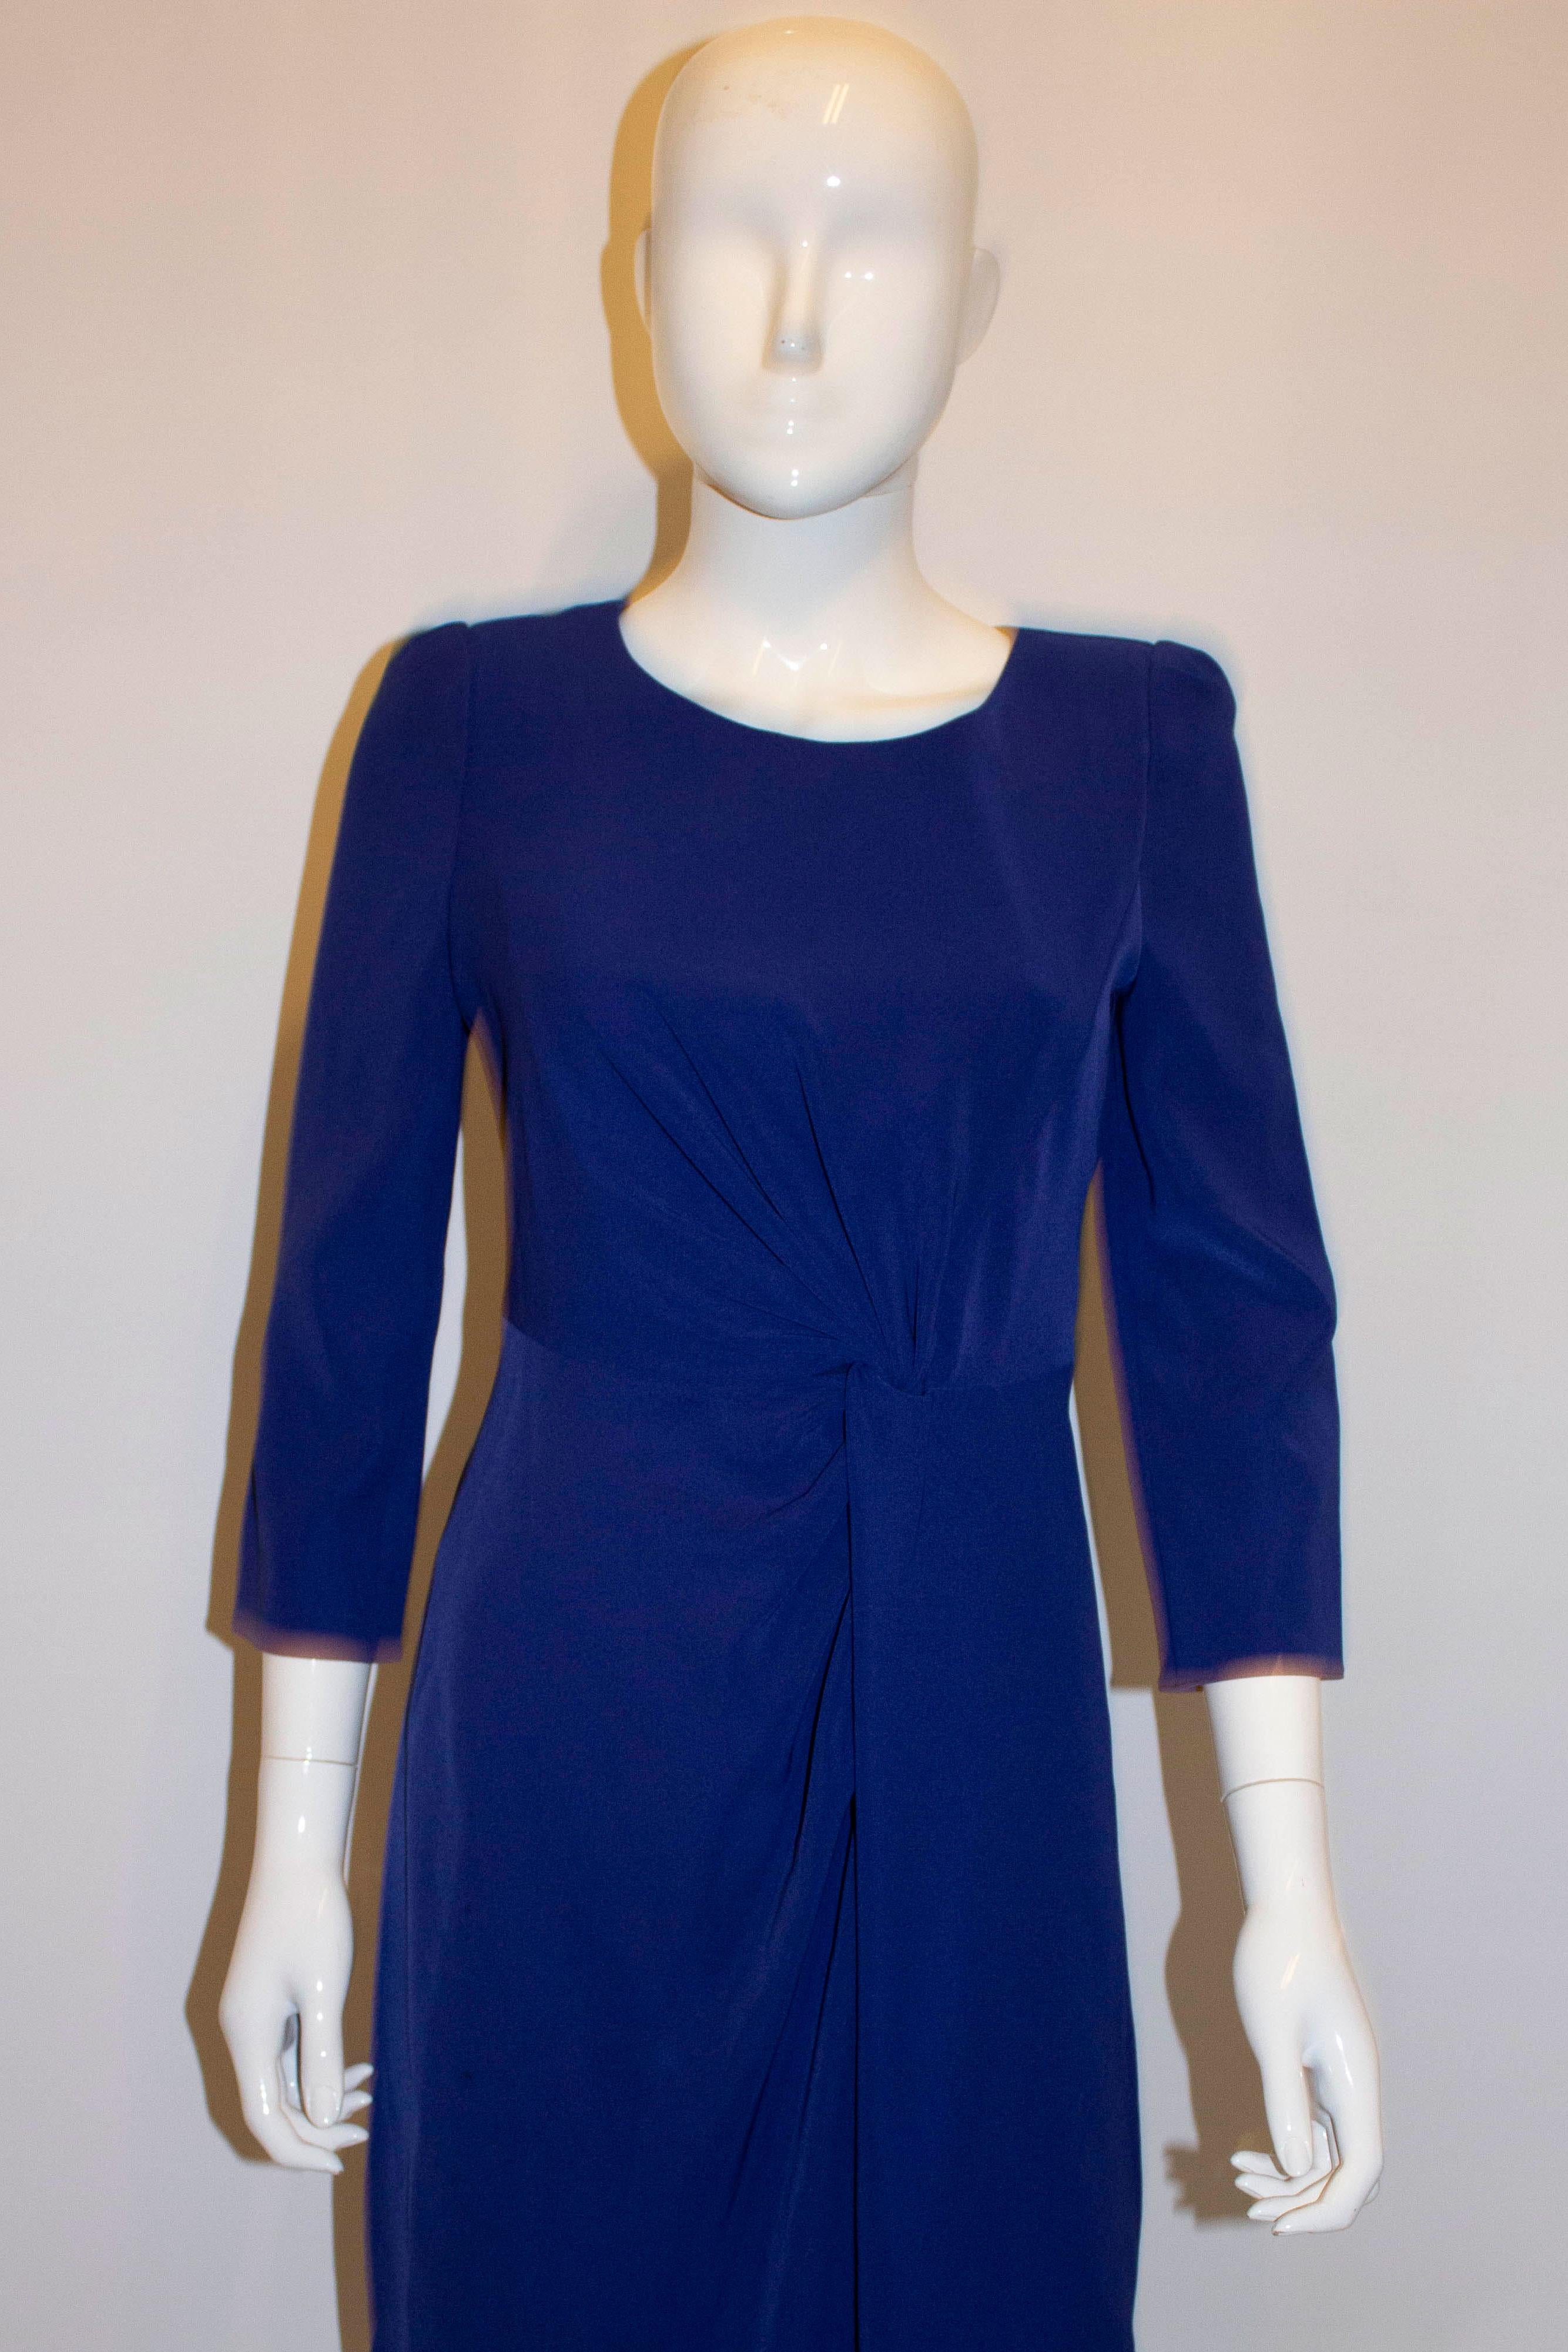 Armani Colezzioni Blue Cocktail Dress In Good Condition For Sale In London, GB